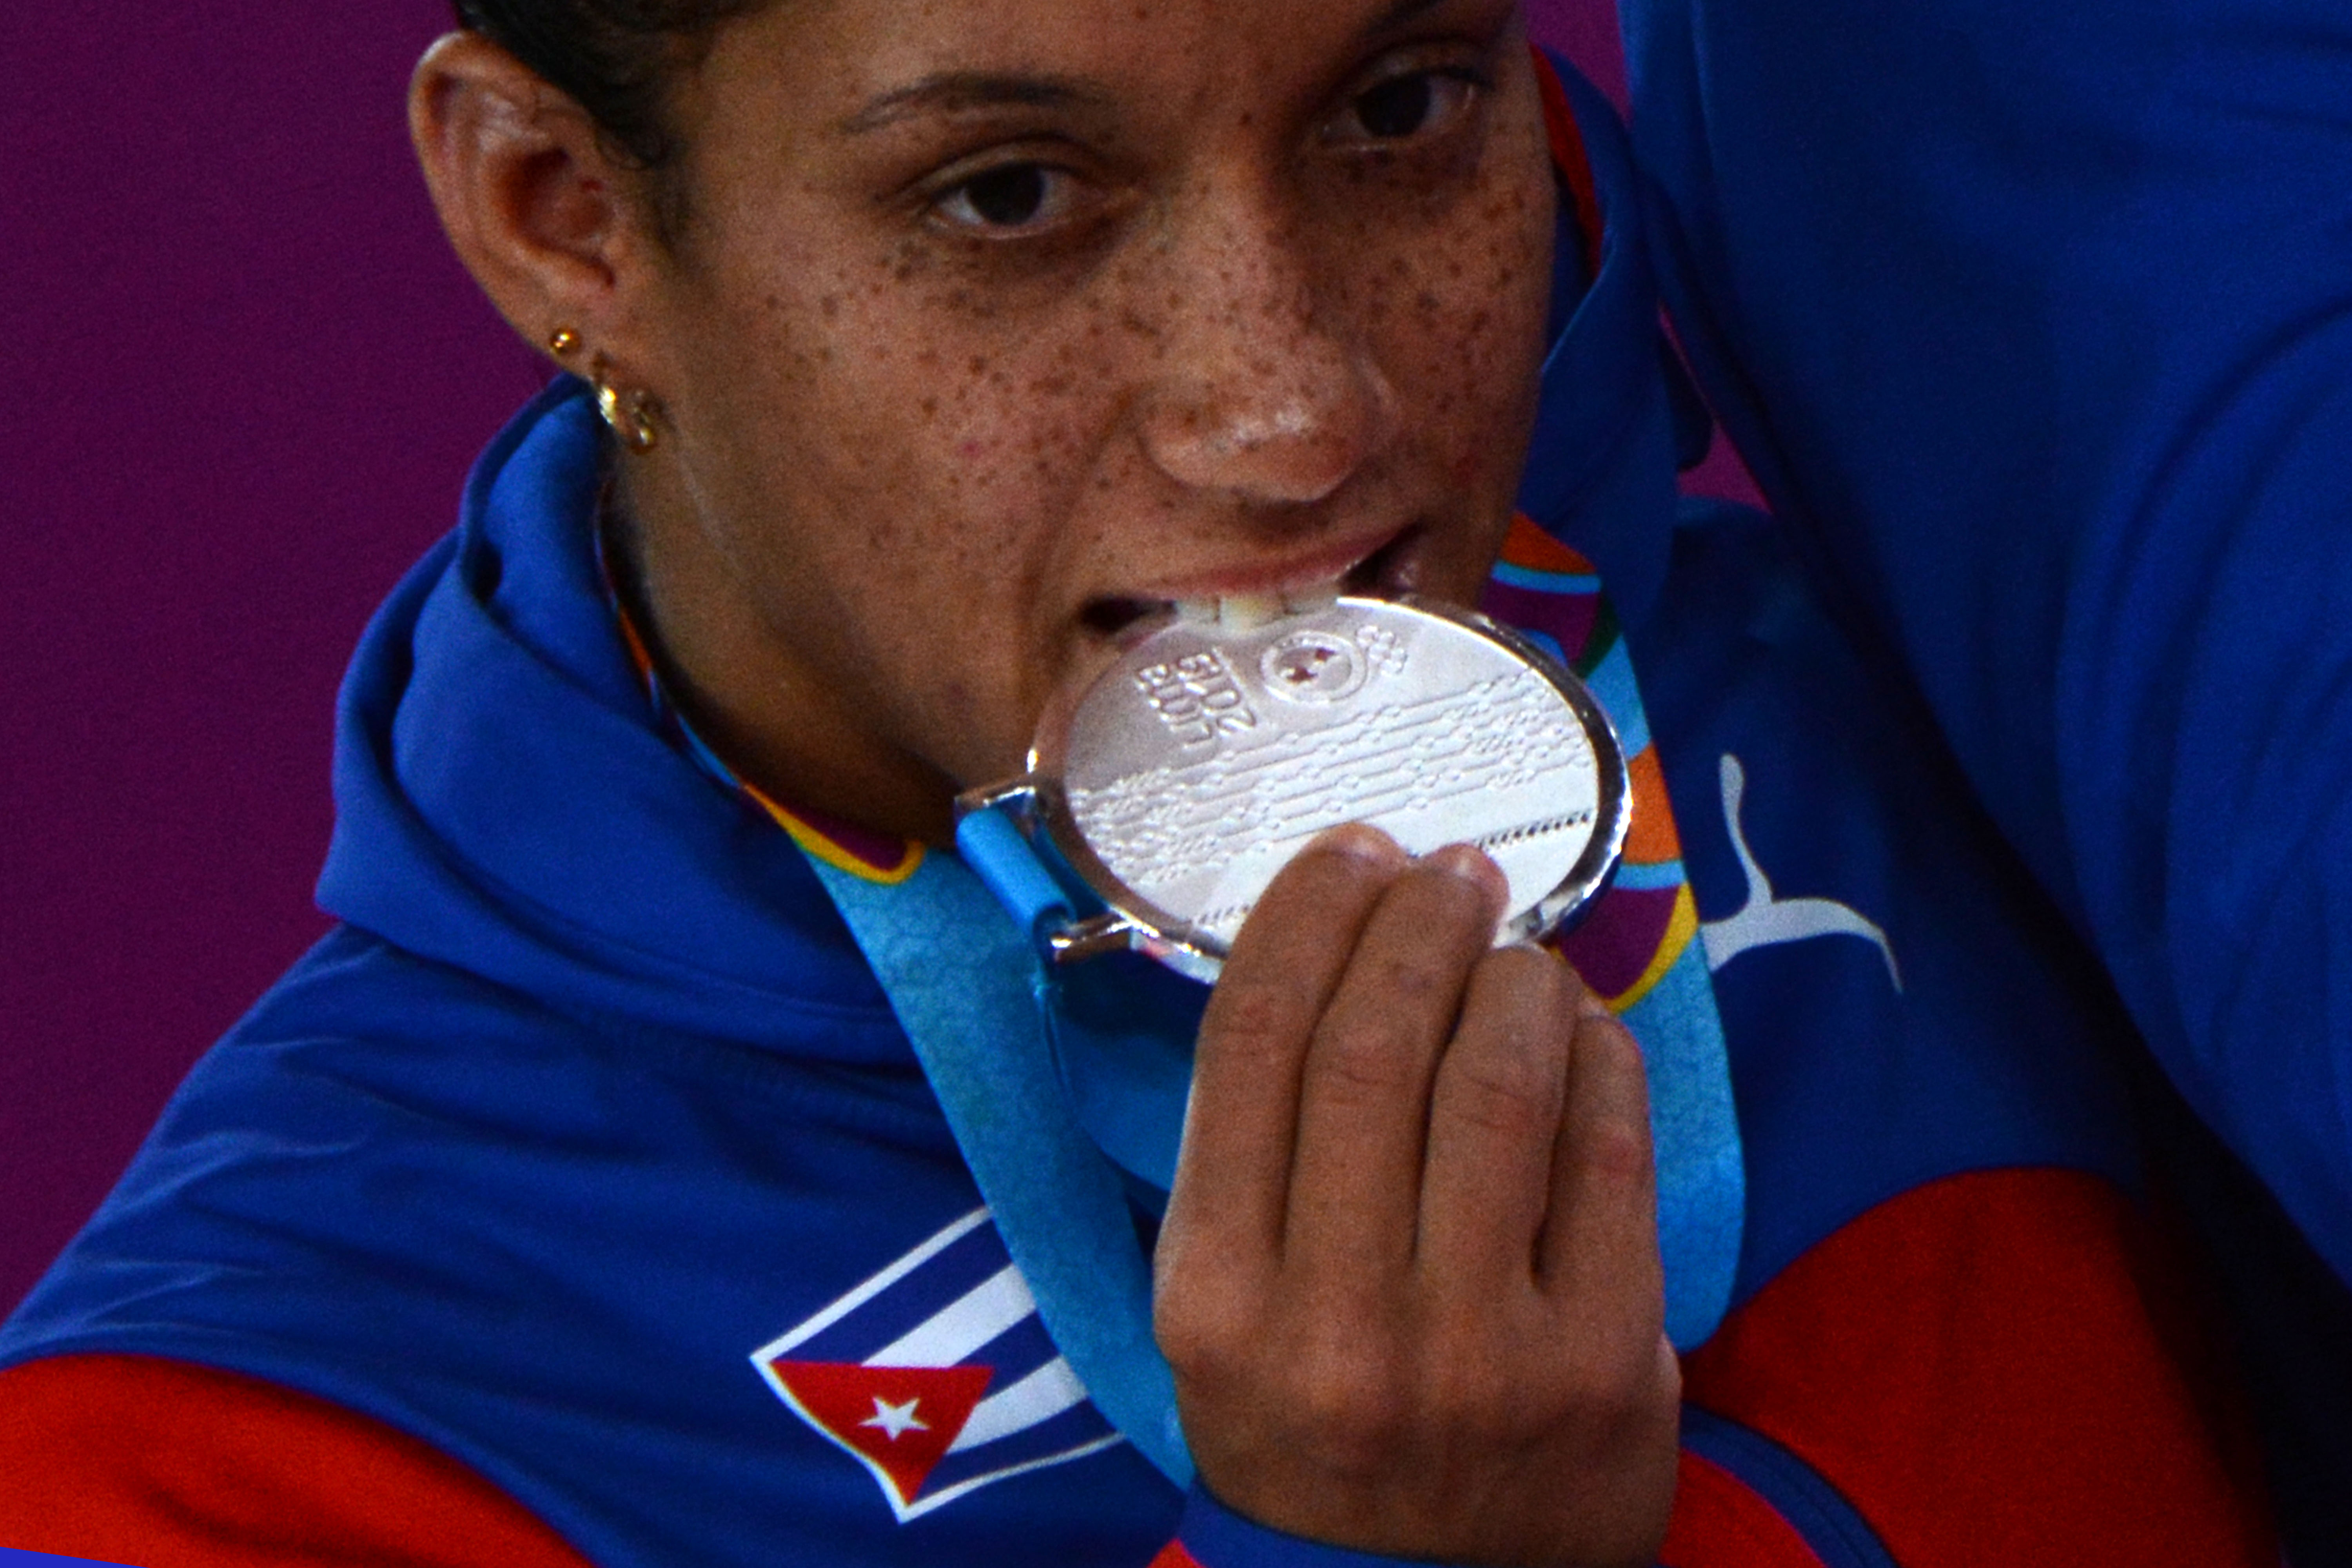 Yusneylis Guzmán, plata en los Juegos Panamericanos. FOTO/Osvaldo GUTIÉRREZ GÓMEZ